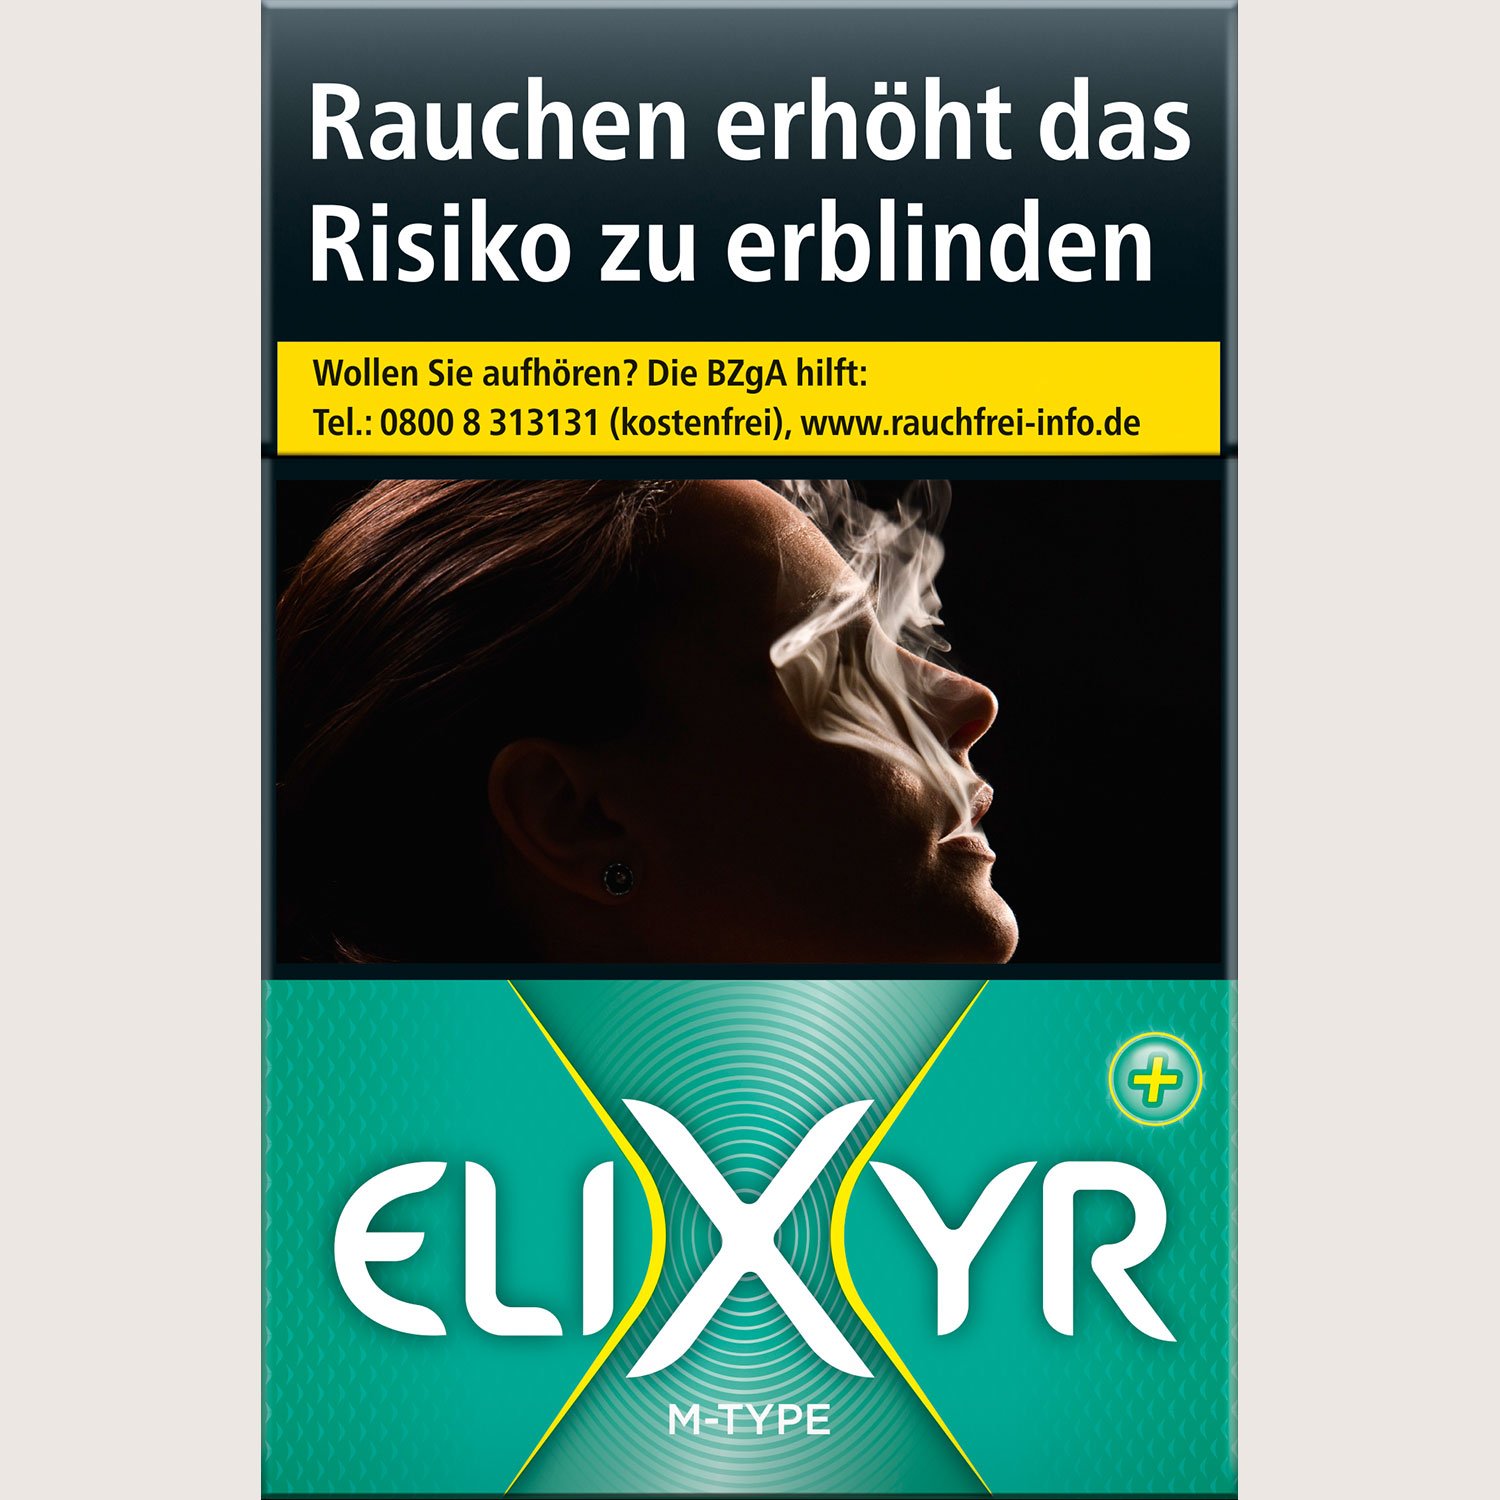 Elixyr Plus M-Type 7,00 €